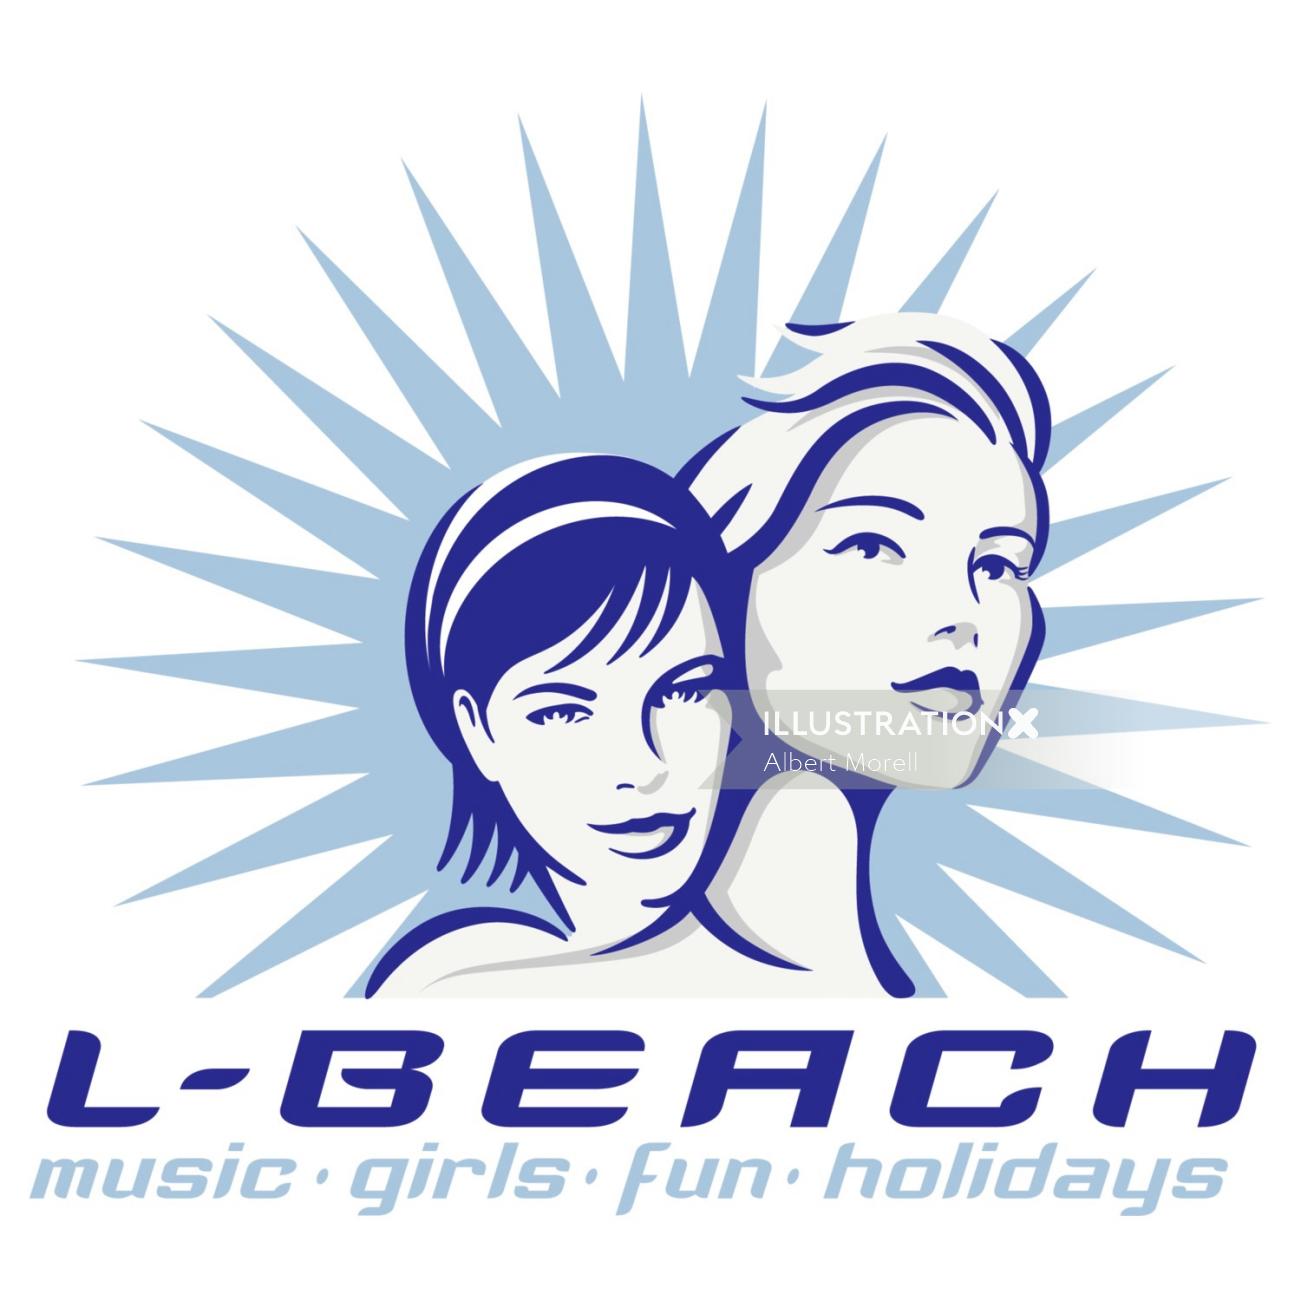 Fun Music Girls party icon
